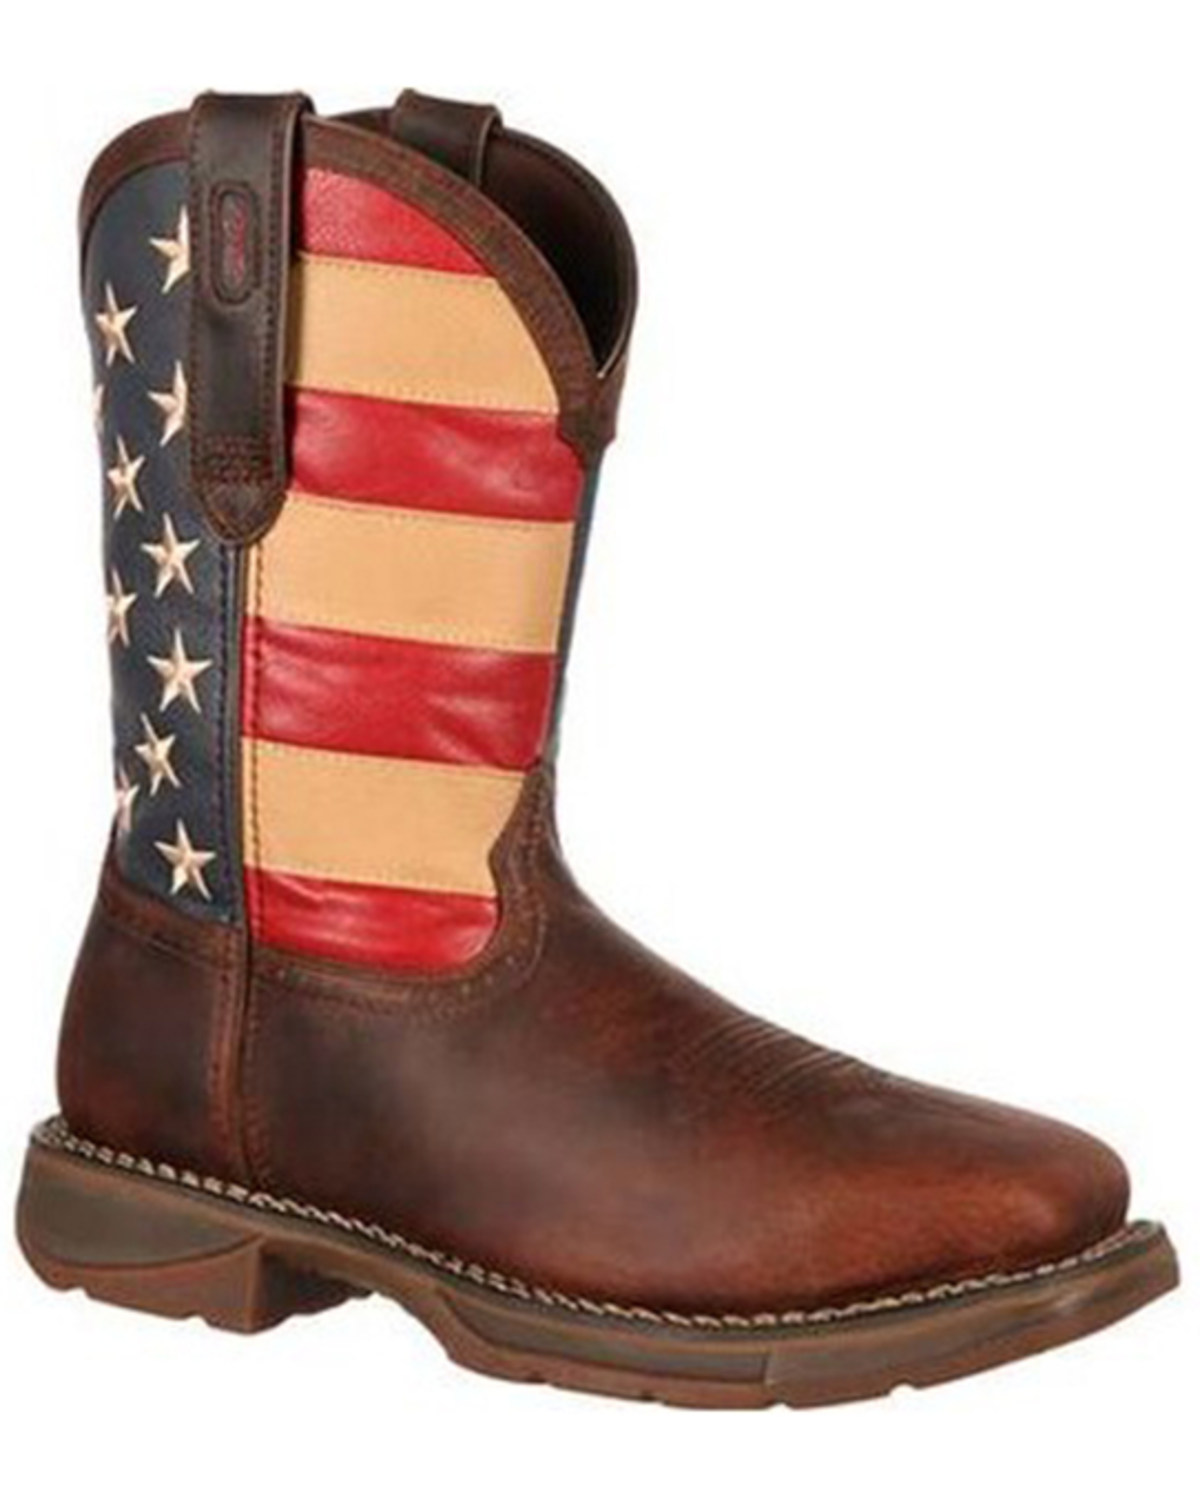 Rebel by Durango Men's Steel Toe American Flag Western Work Boots